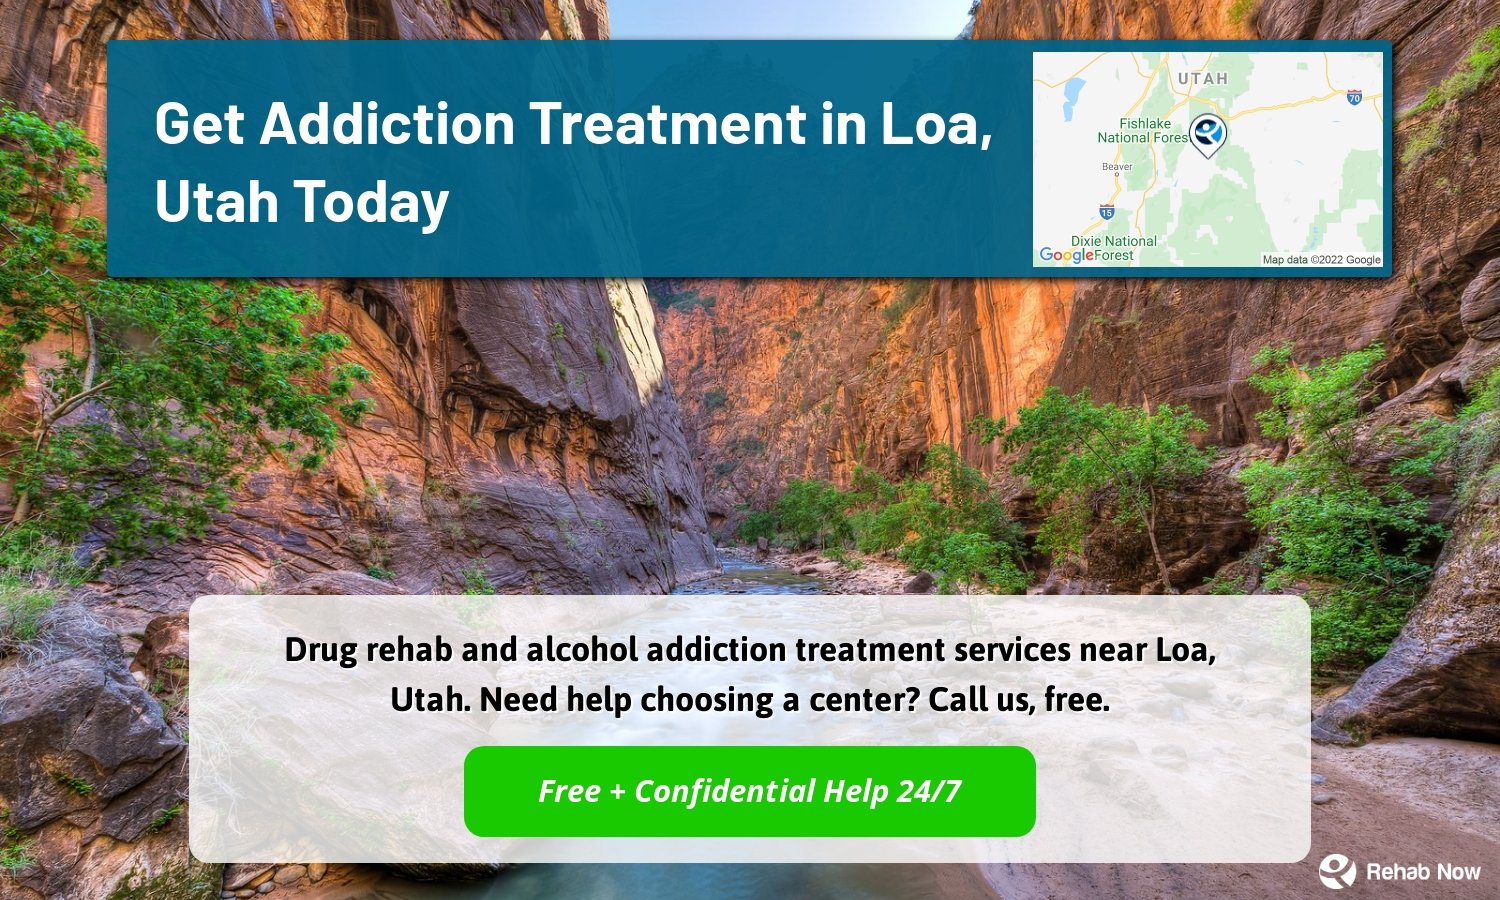 Drug rehab and alcohol addiction treatment services near Loa, Utah. Need help choosing a center? Call us, free.